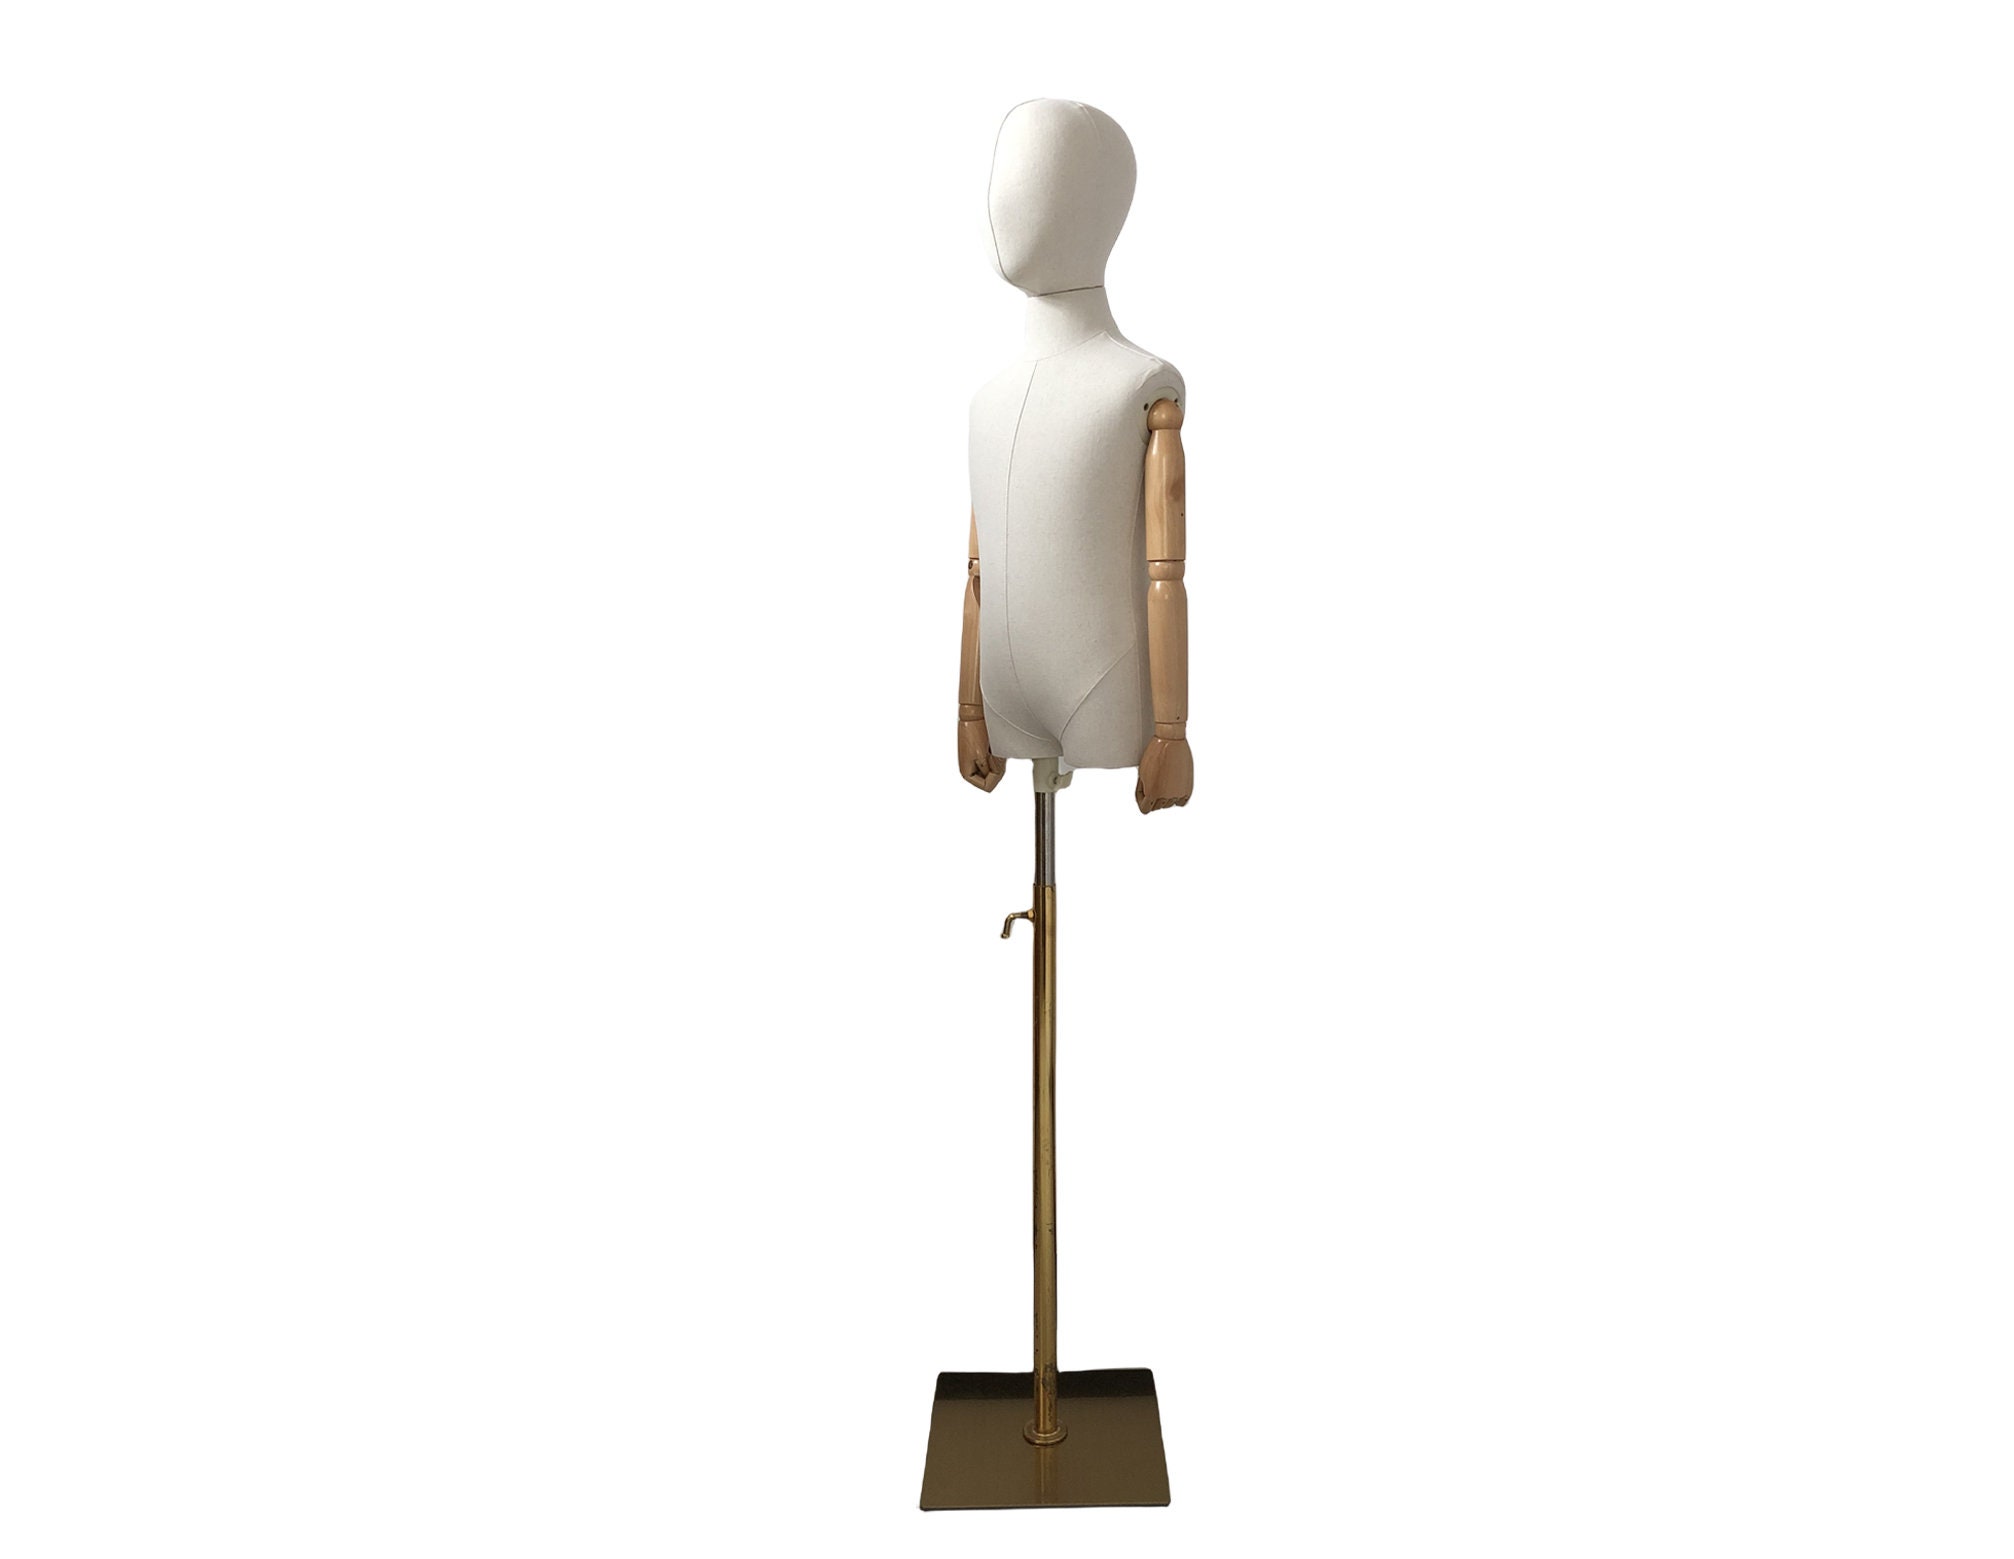 Adjustable Gold Square Base White Linen Child Mannequin Dress Form Teo